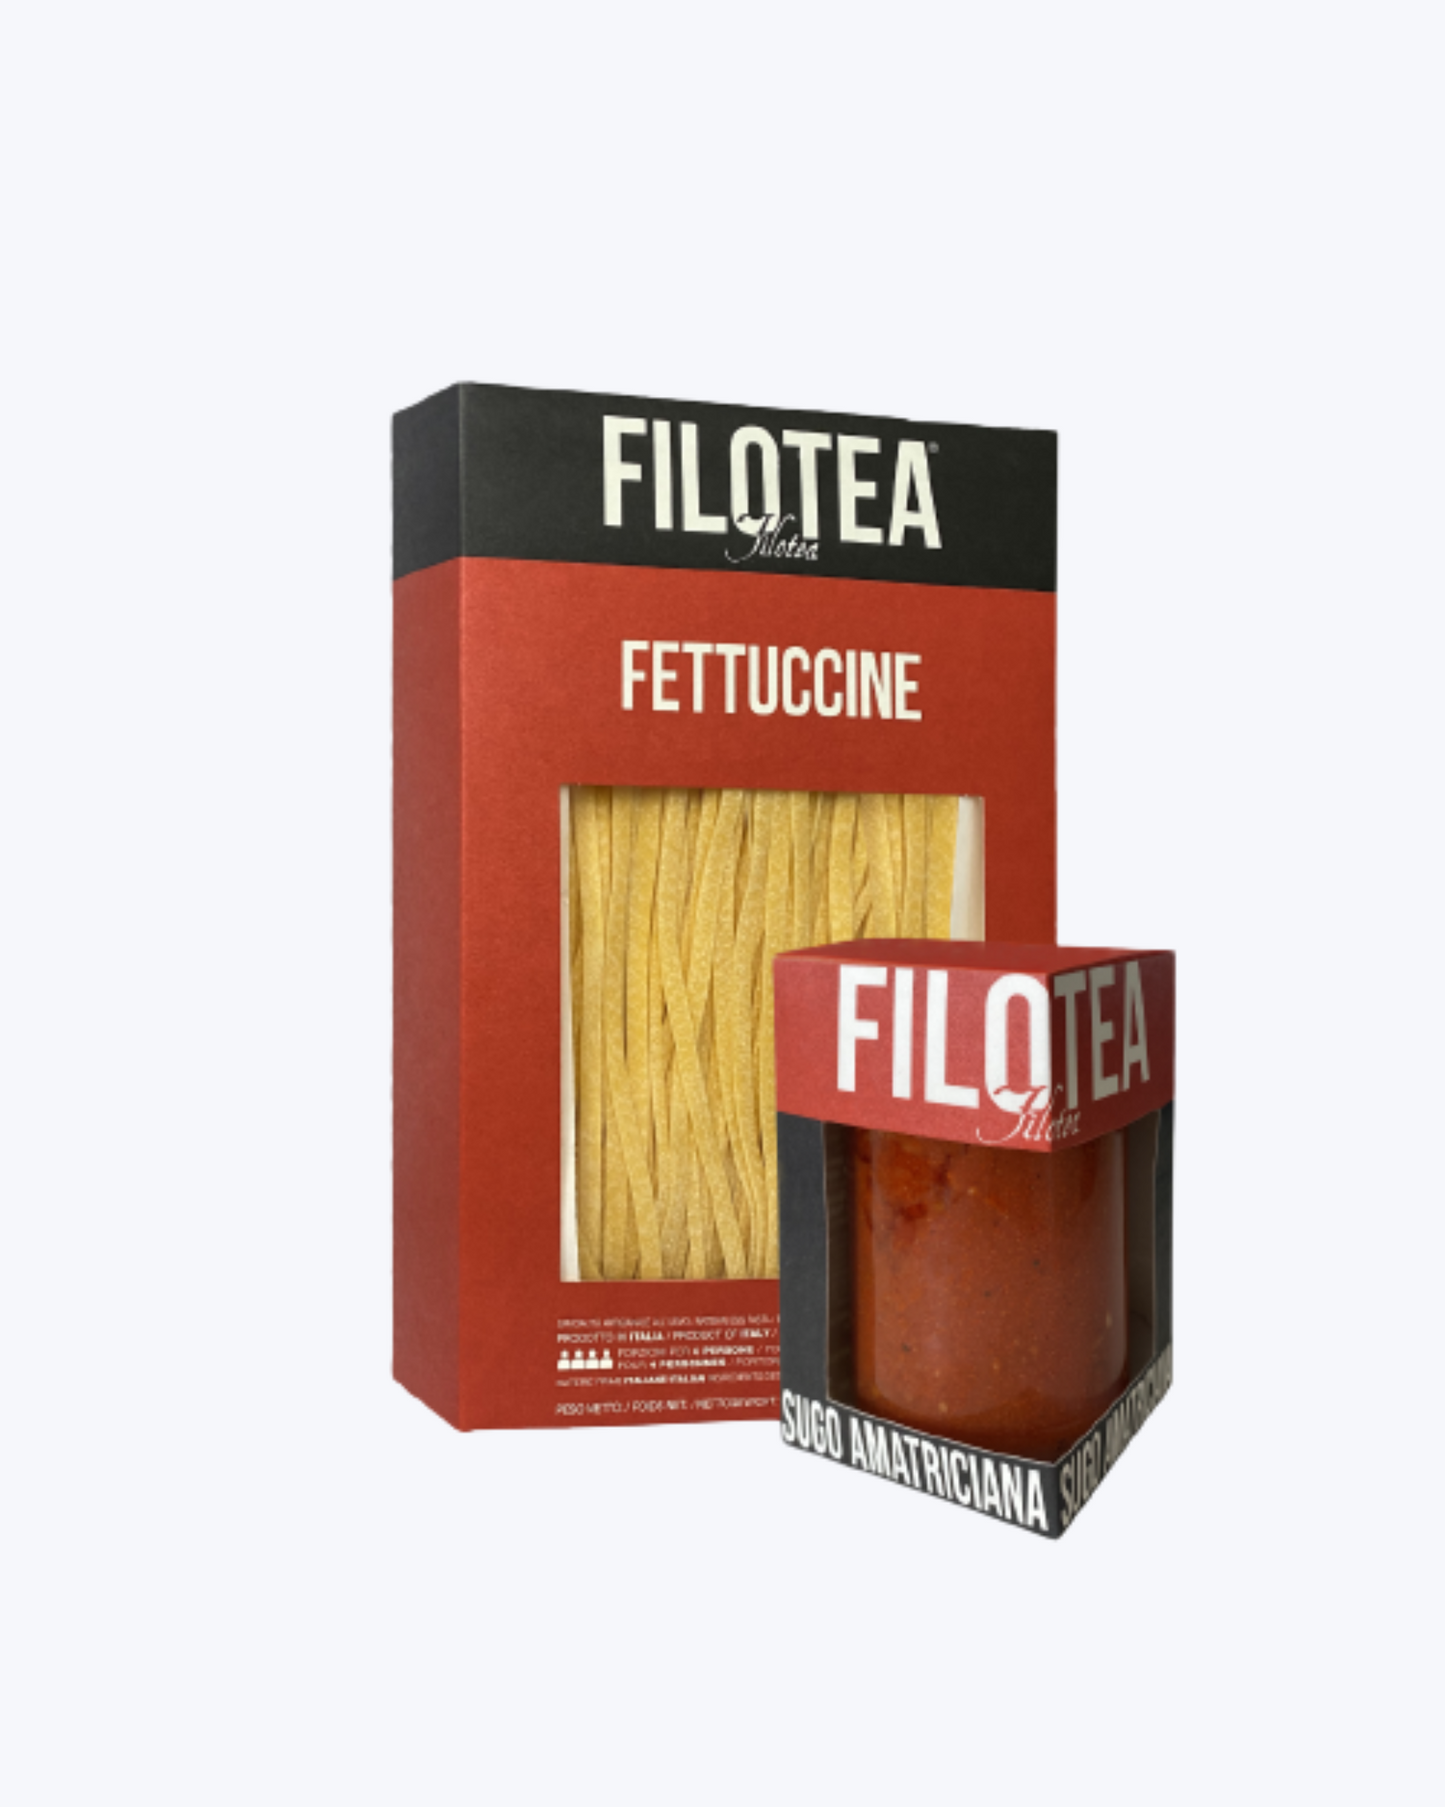 Tobulas derinys: Fettuccine pasta ir Amatriciana padažas